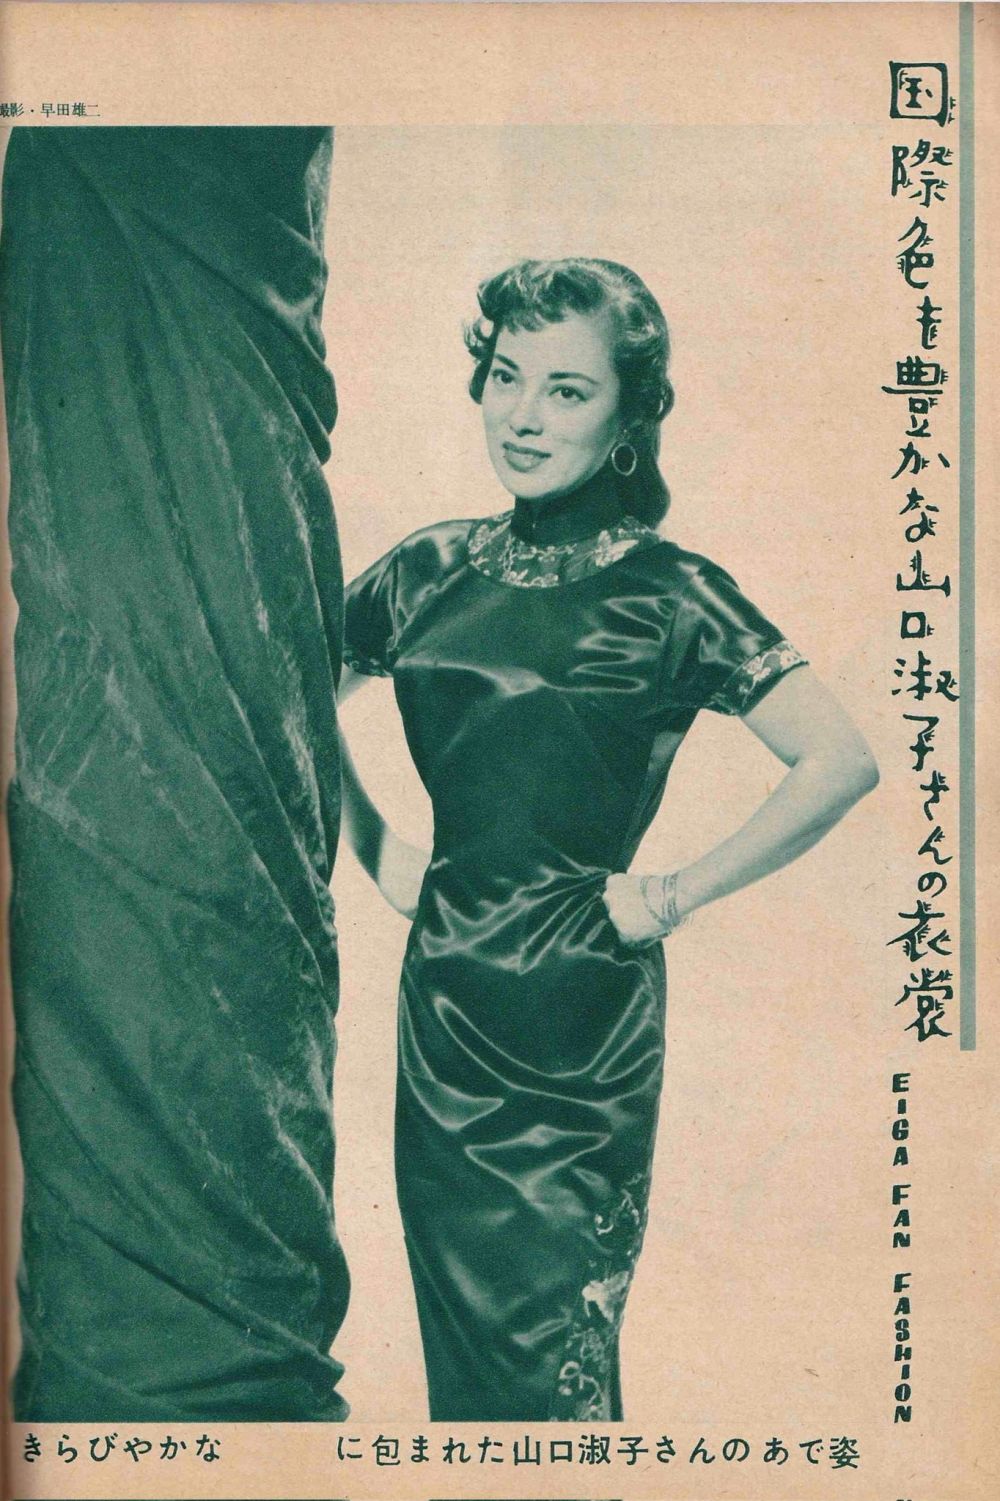 Shirley Yamaguchi Sexy and Hottest Photos , Latest Pics